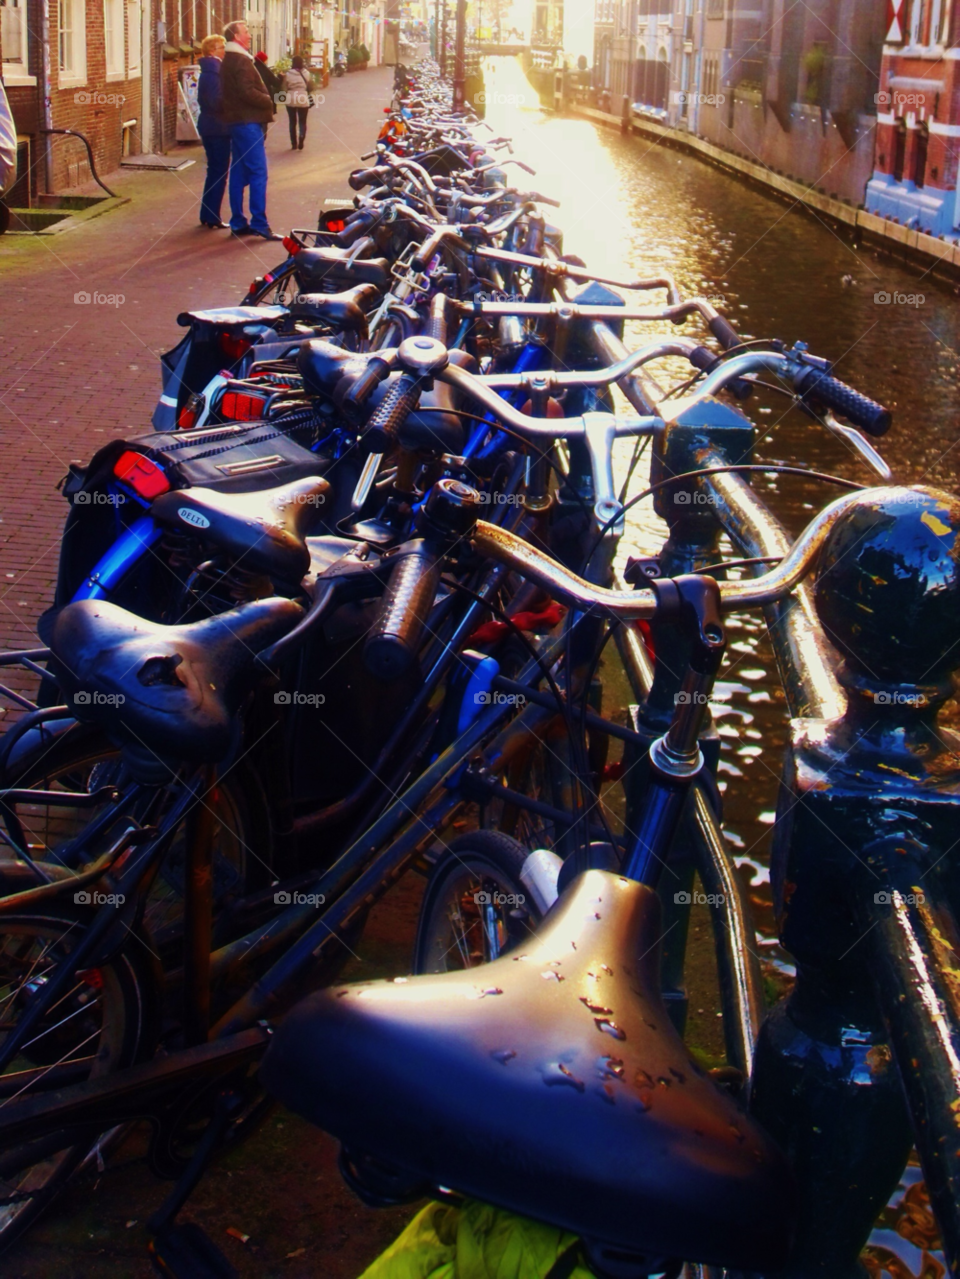 in amsterdam amsterdam bikes amsterdam by lawrence007